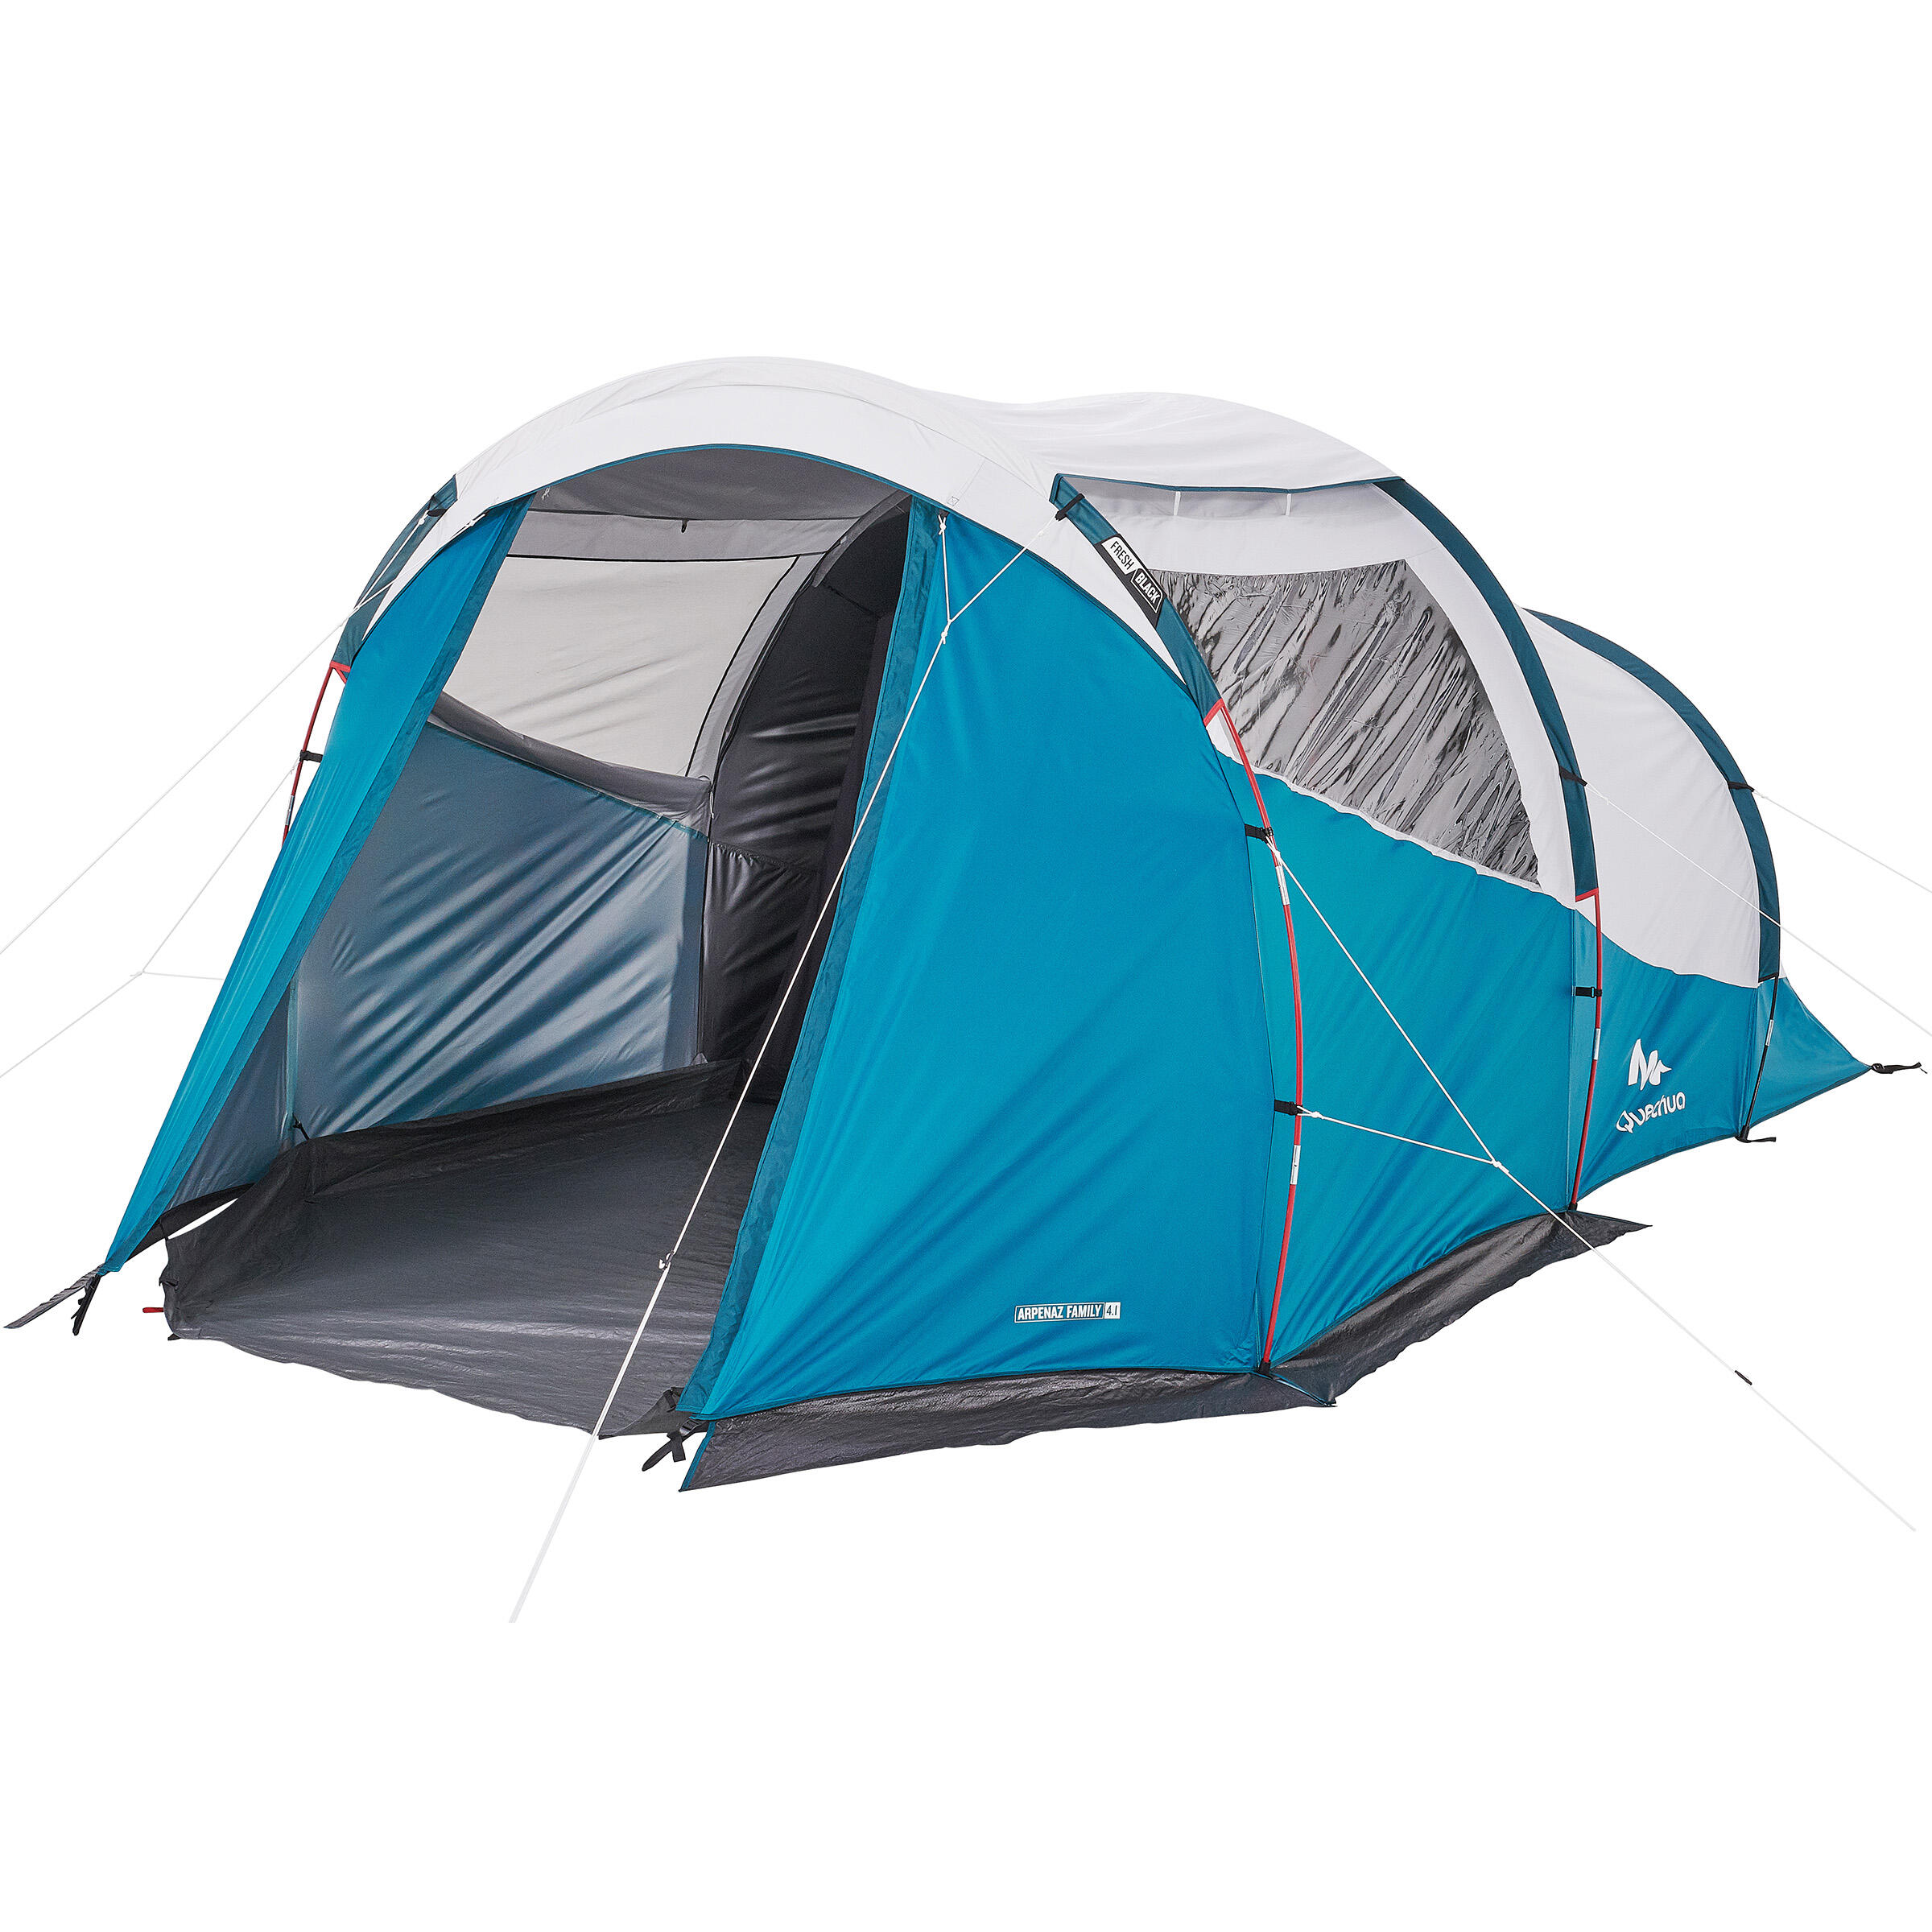 decathlon 1 man tent